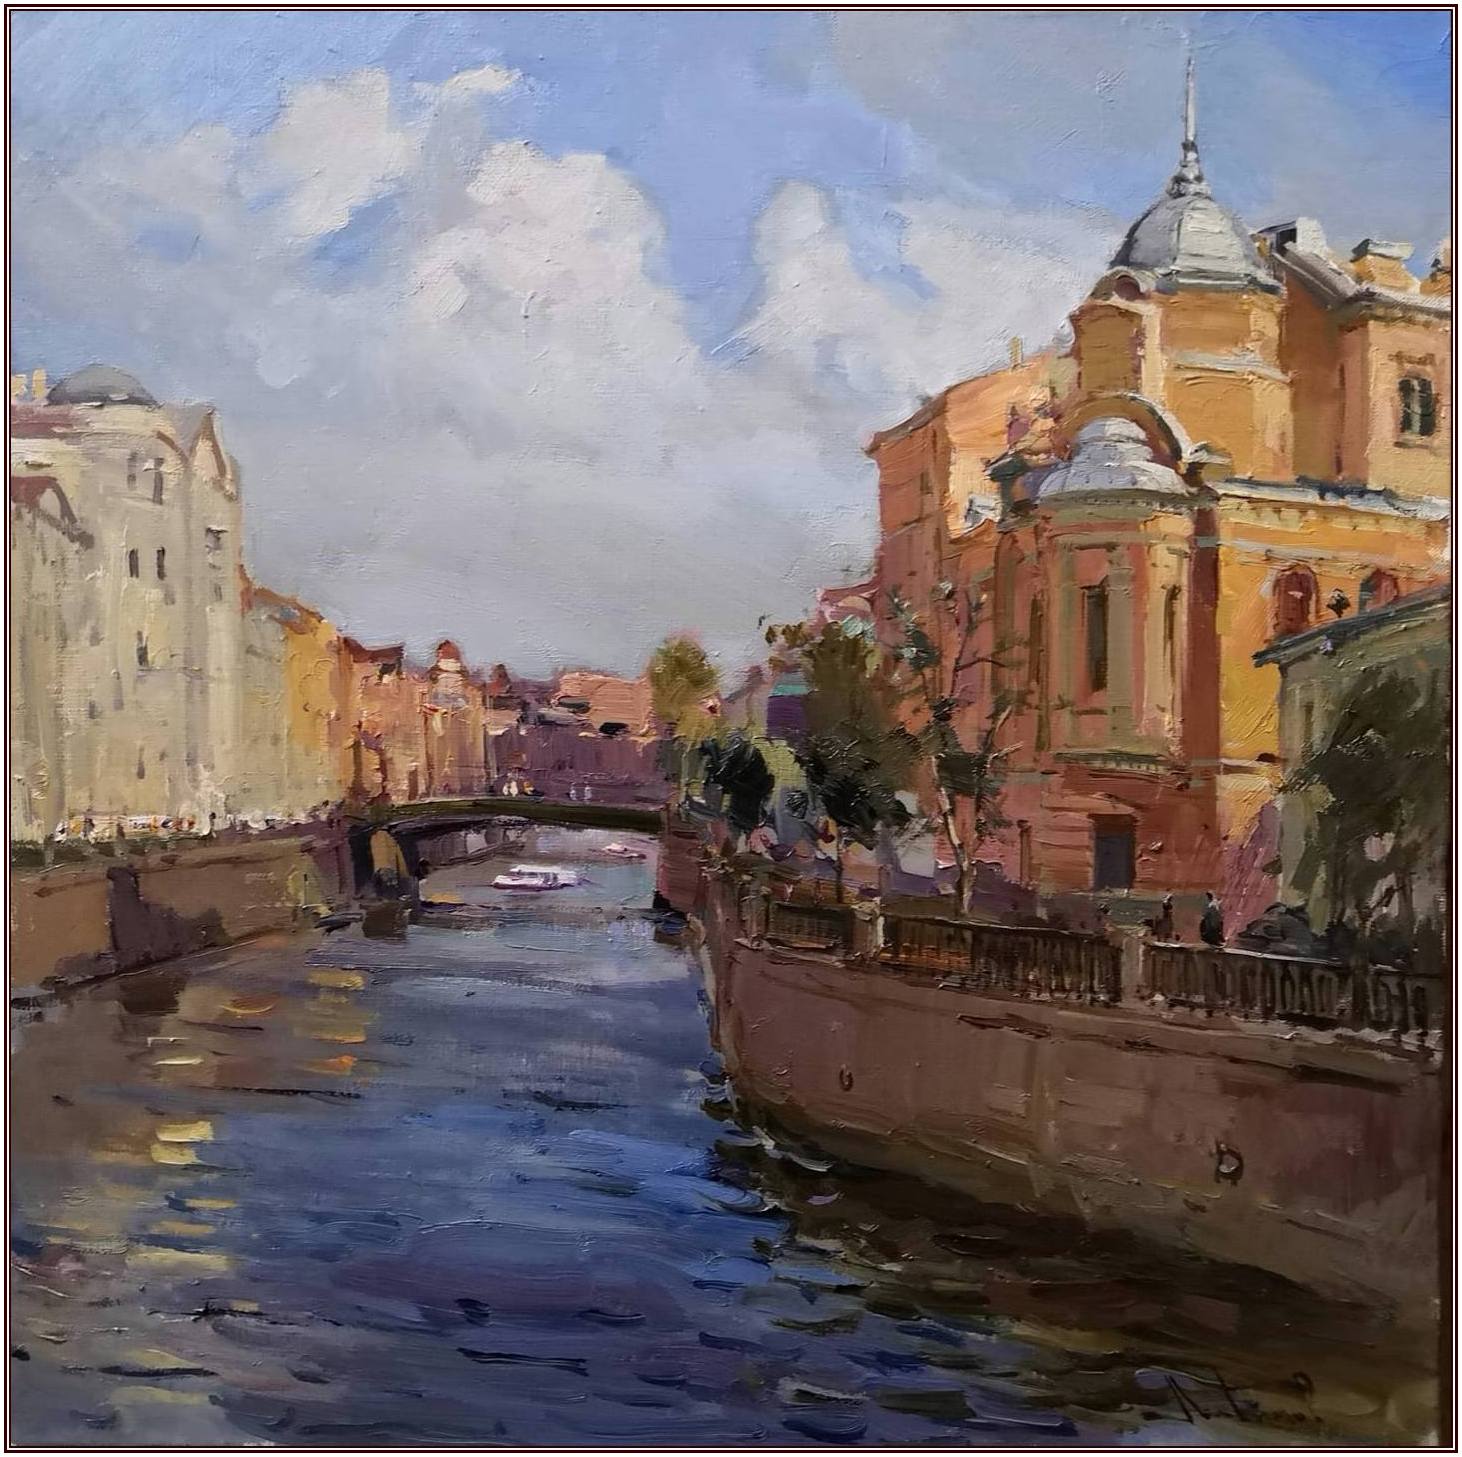  - 1, Sergey Lyubimov, Buy the painting Oil